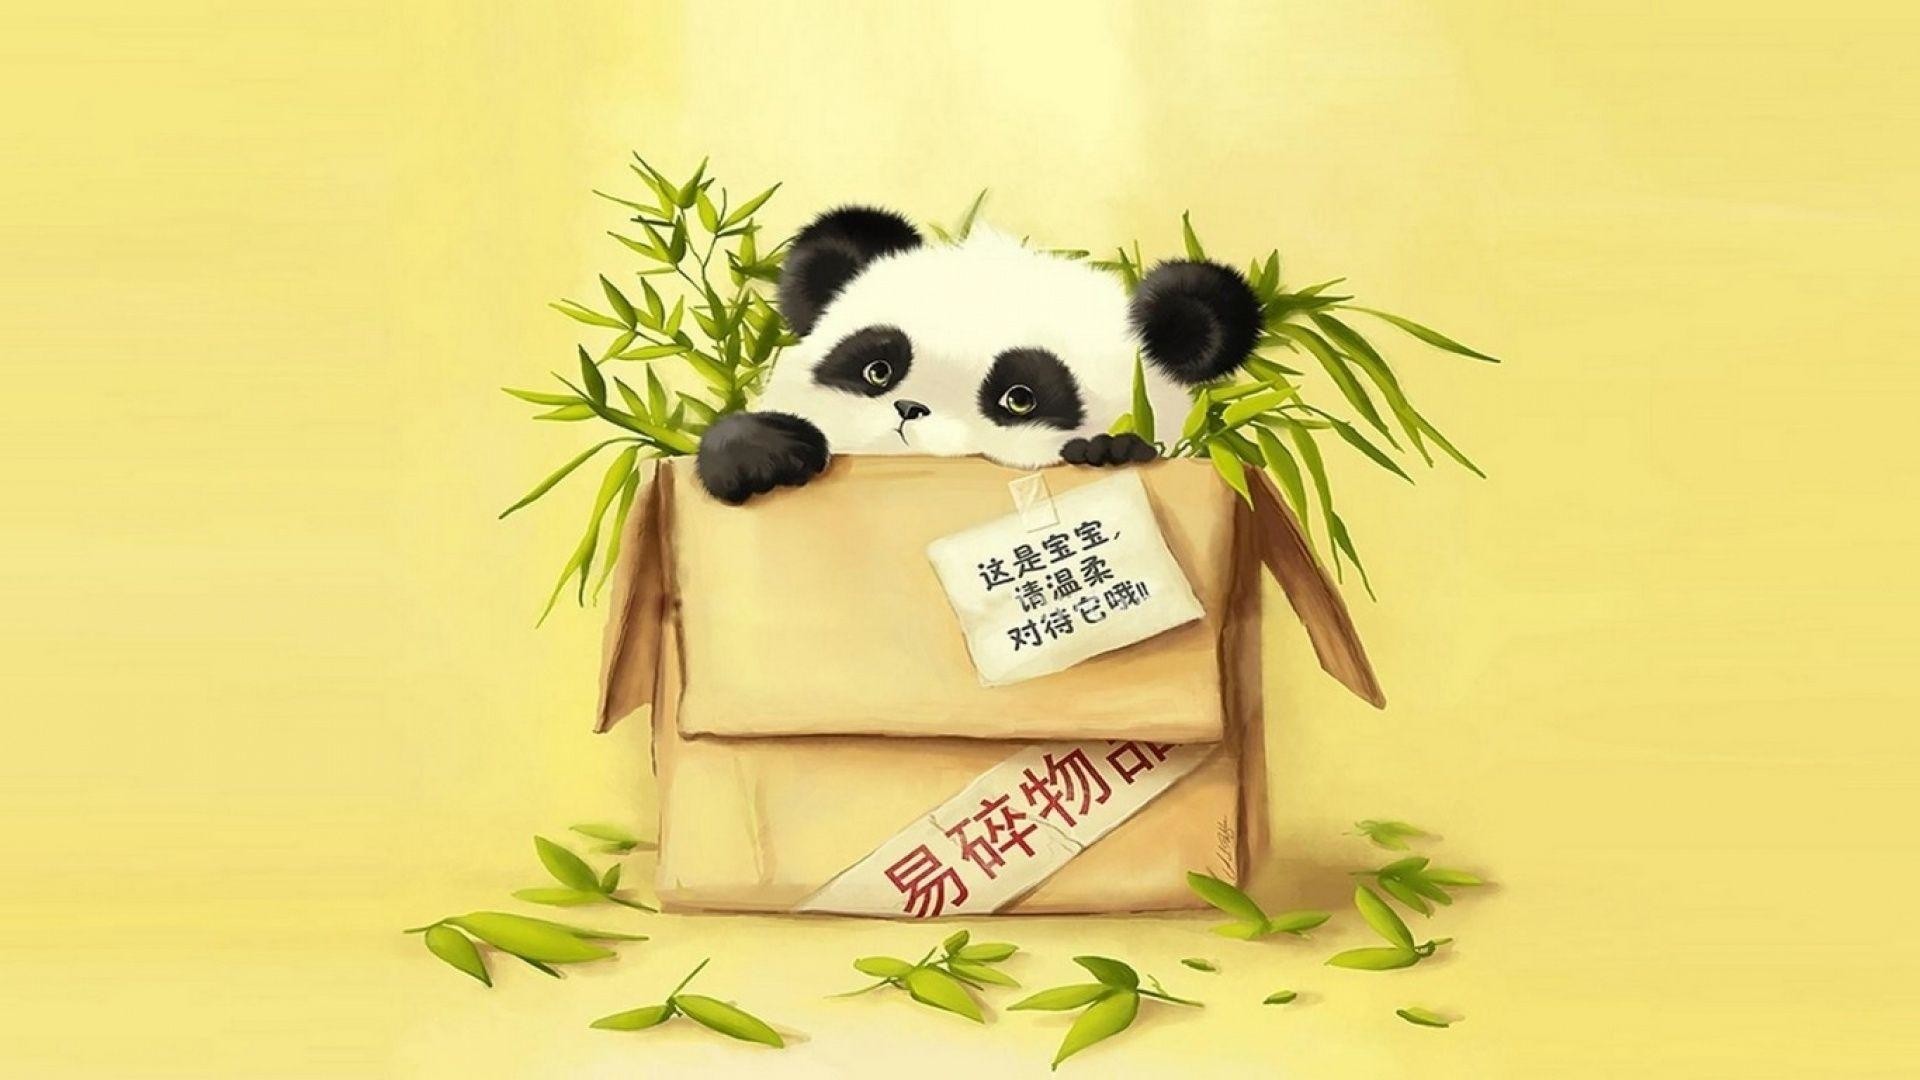 1920x1080 Wallpapers For > Cute Cartoon Panda Wallpaper